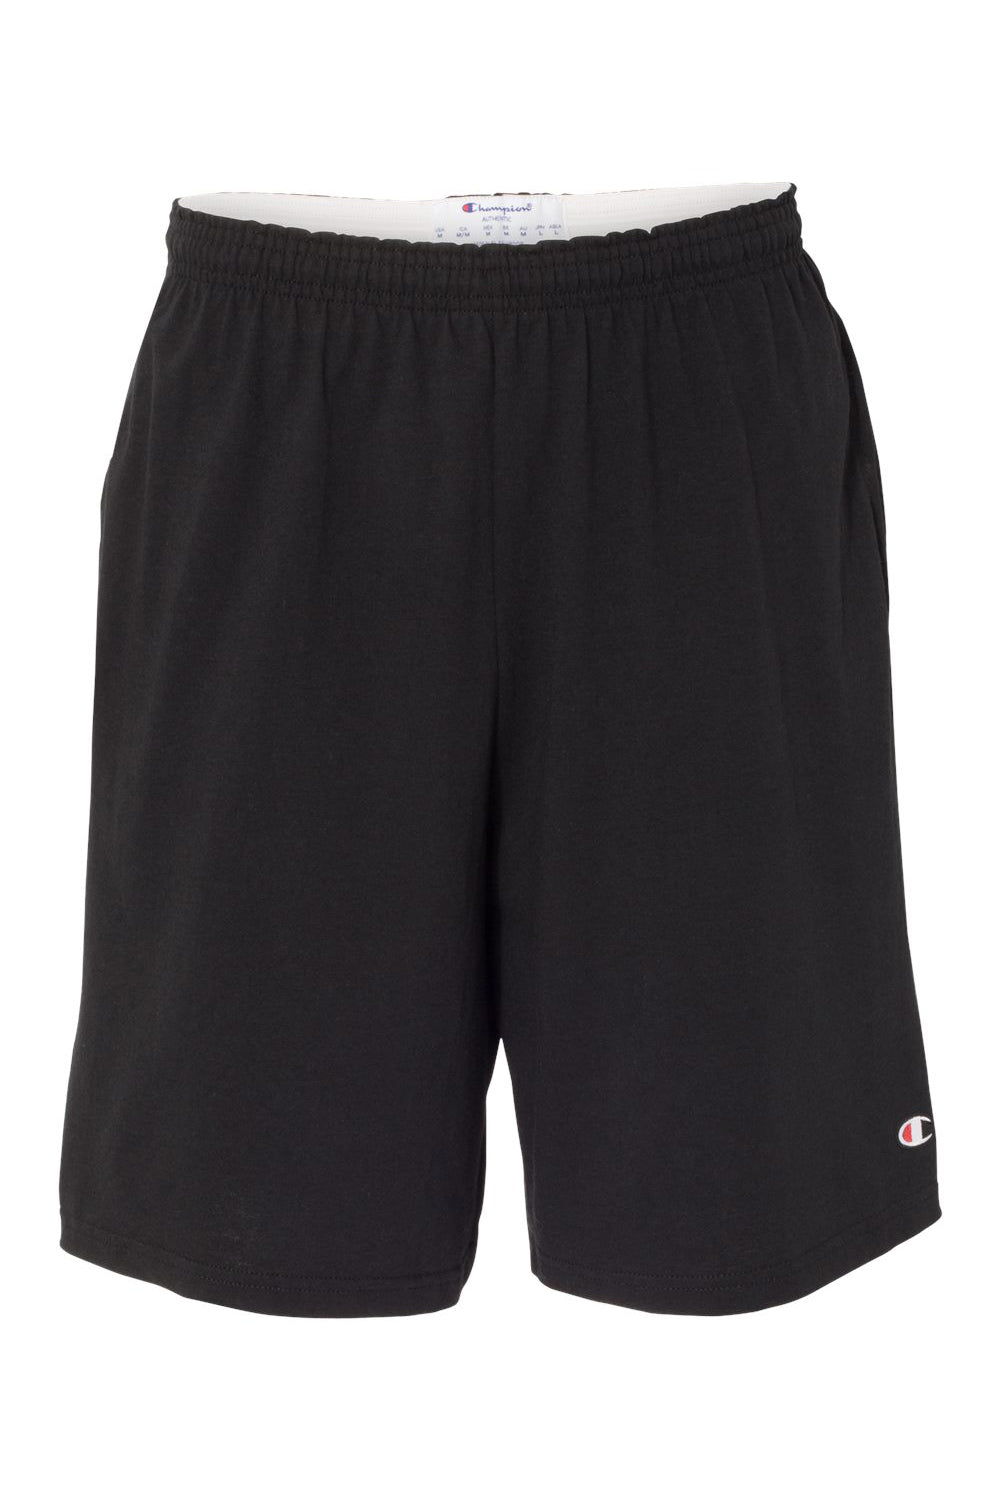 Champion 8180 Mens Shorts w/ Pockets Black Flat Front